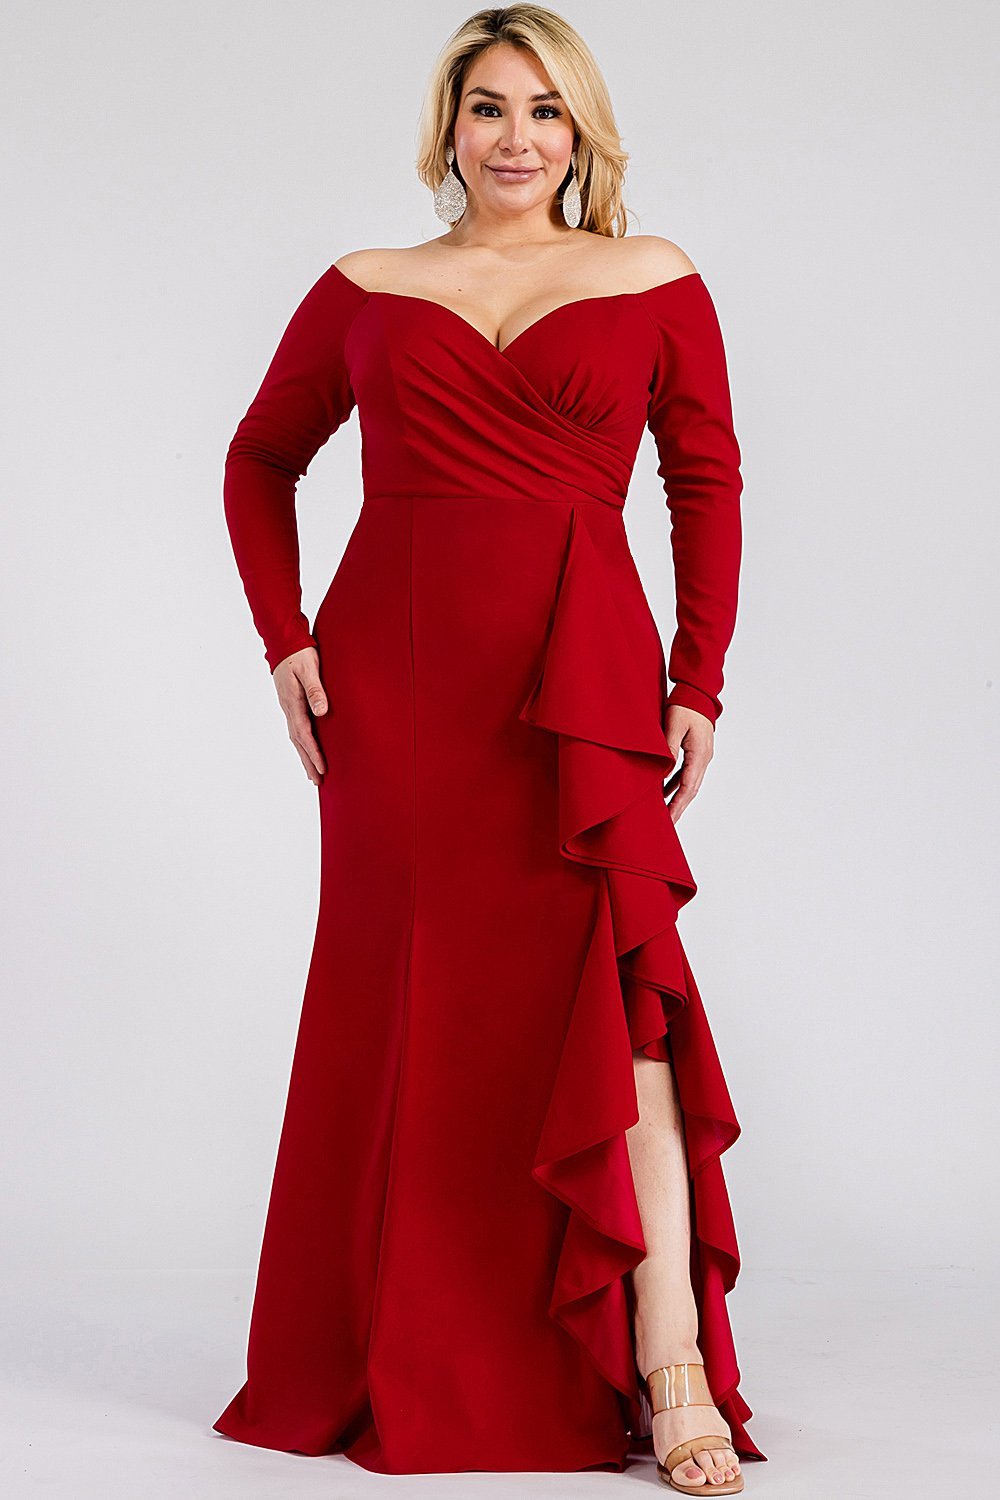 Hannia - rojo - Lend the Trend renta de vestidos mexico